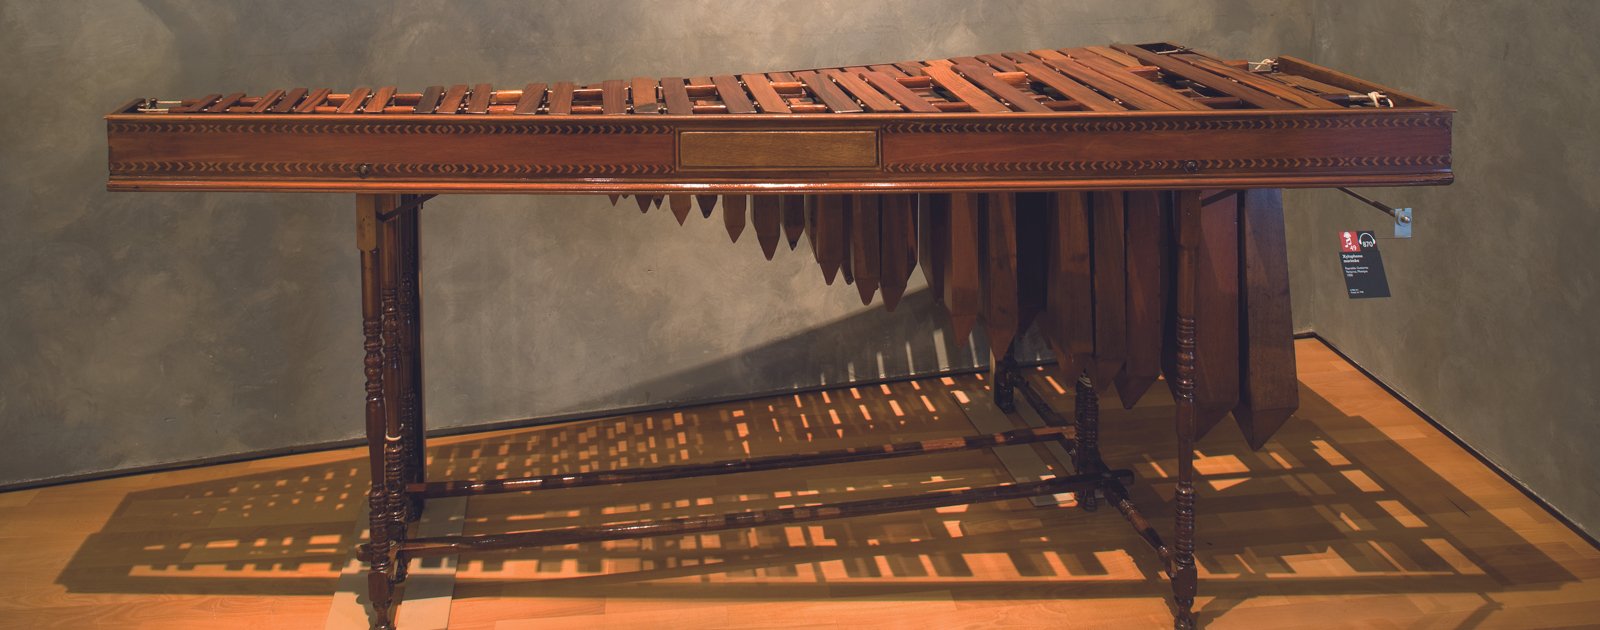 Photo d'un marimba